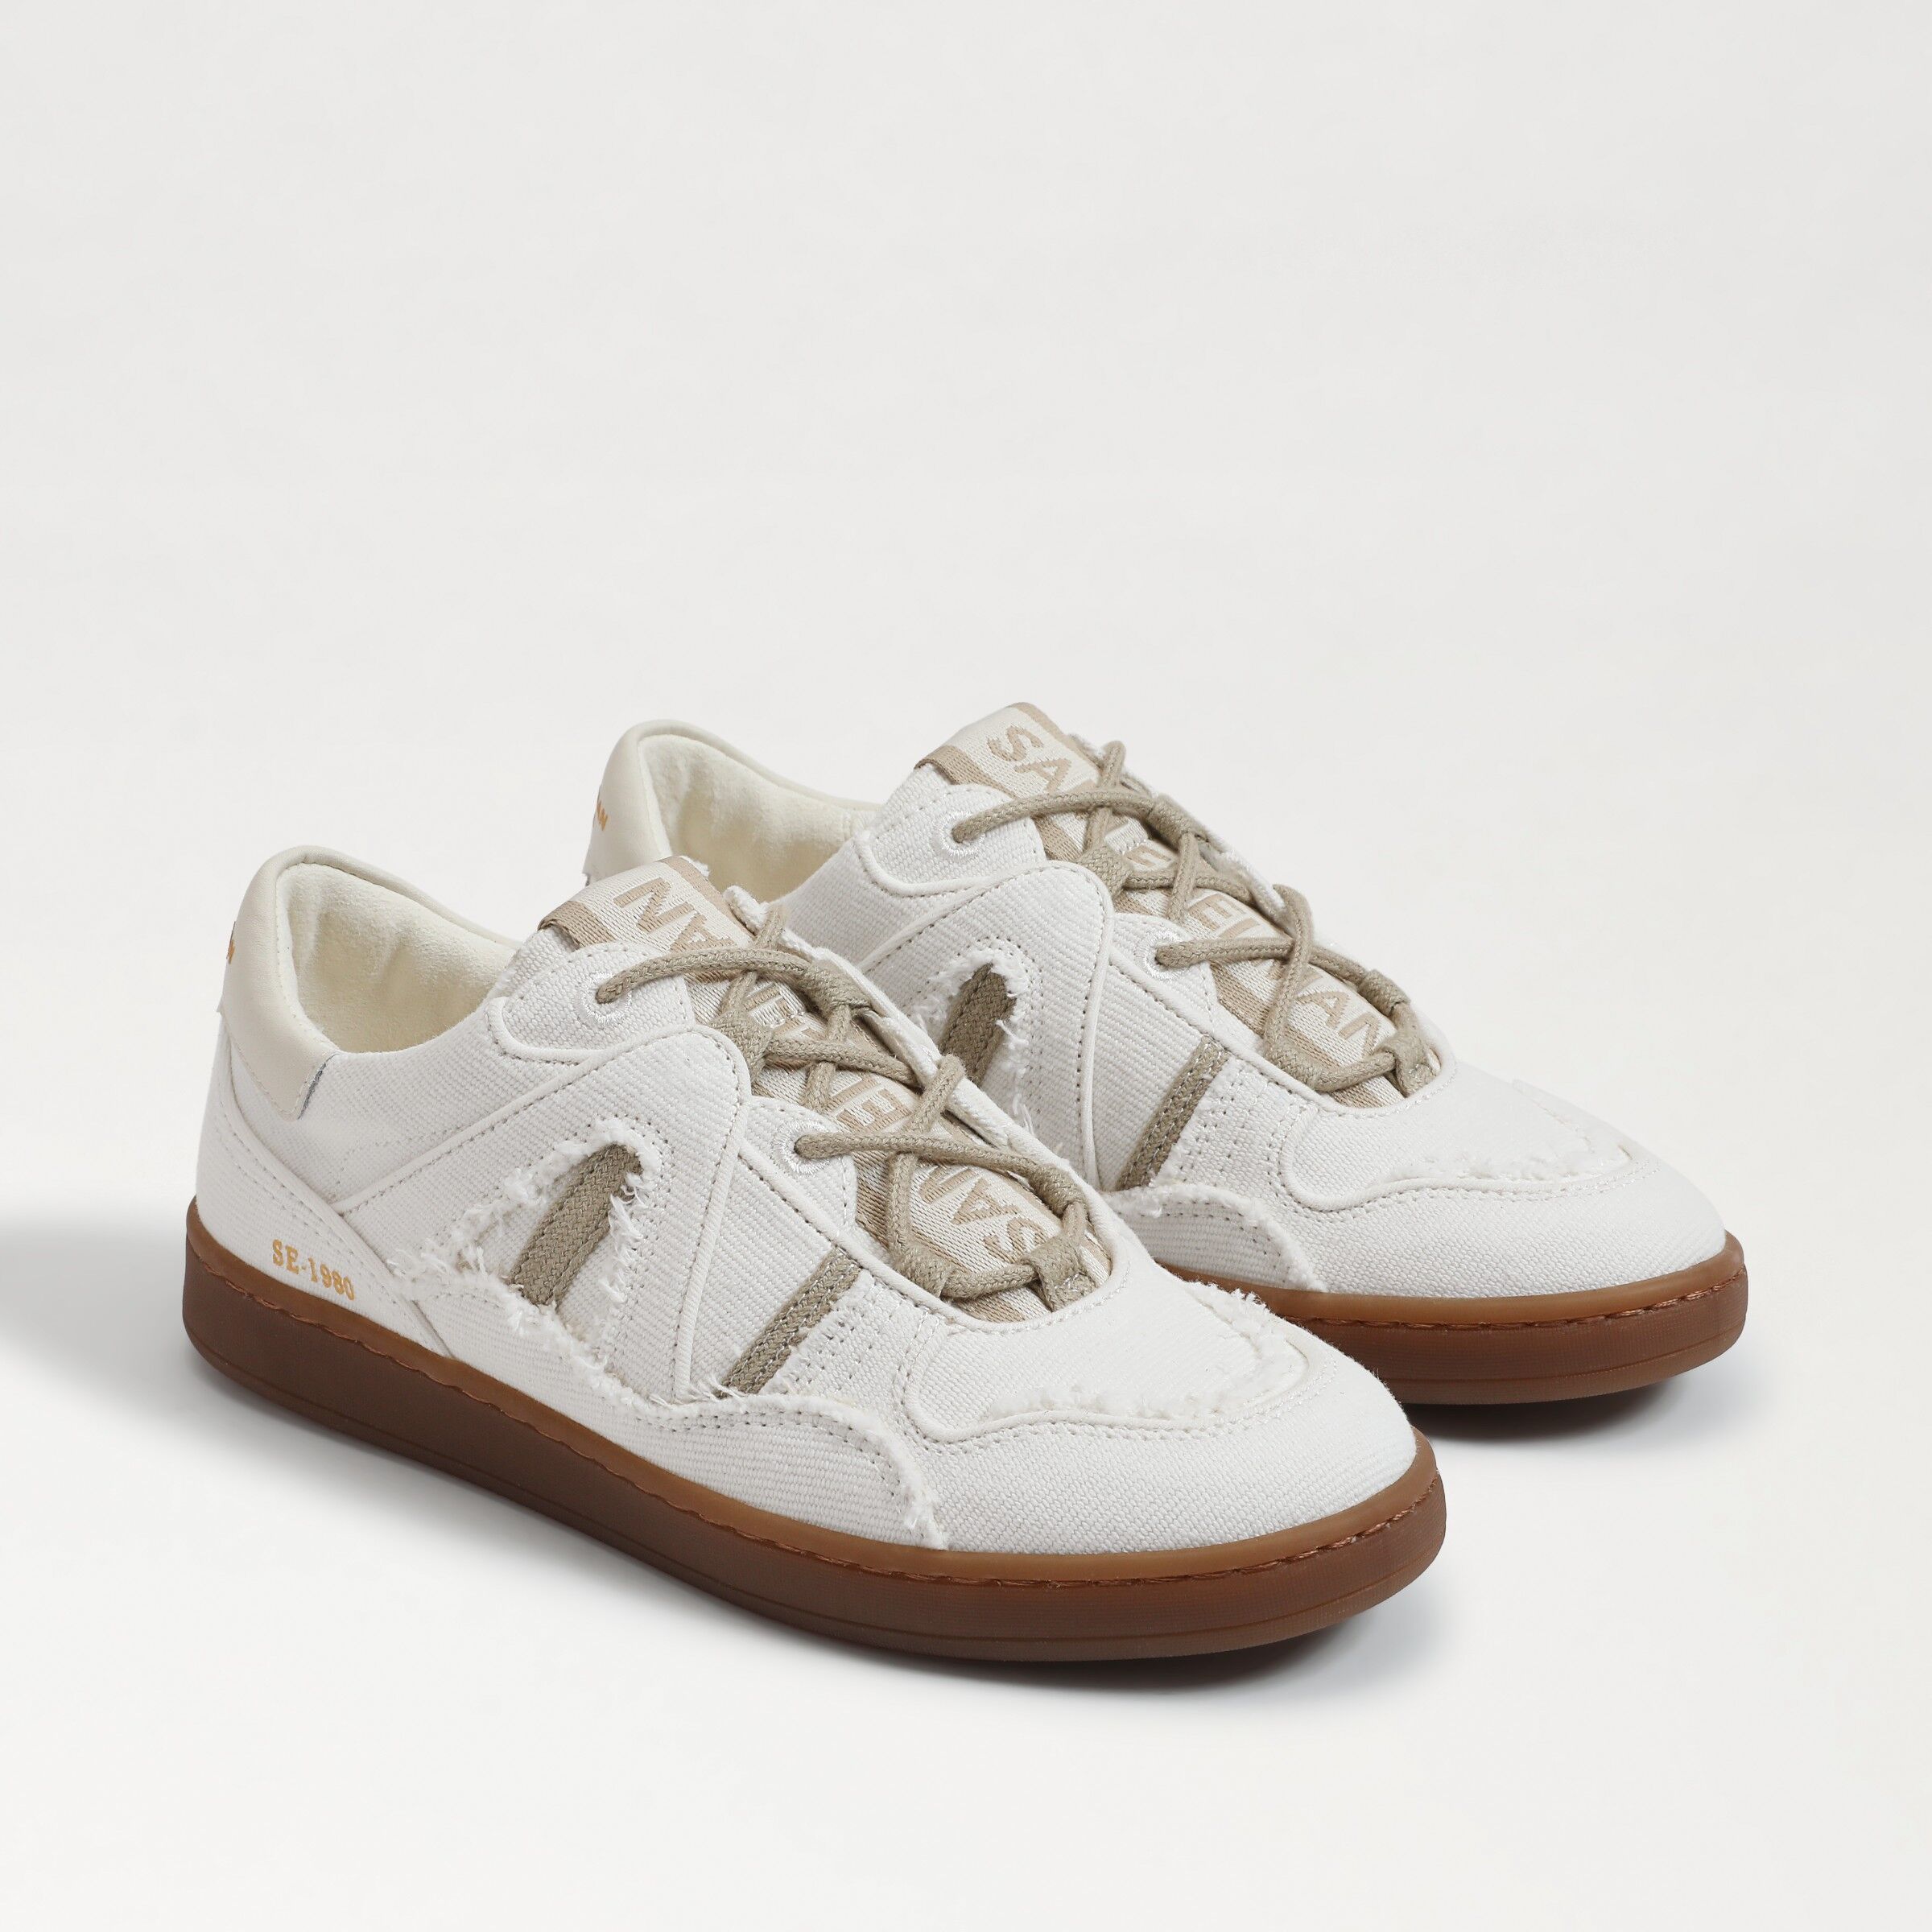 Sam Edelman Jayne Lace Up Sneaker White/Stone Grey Fabric 11.0